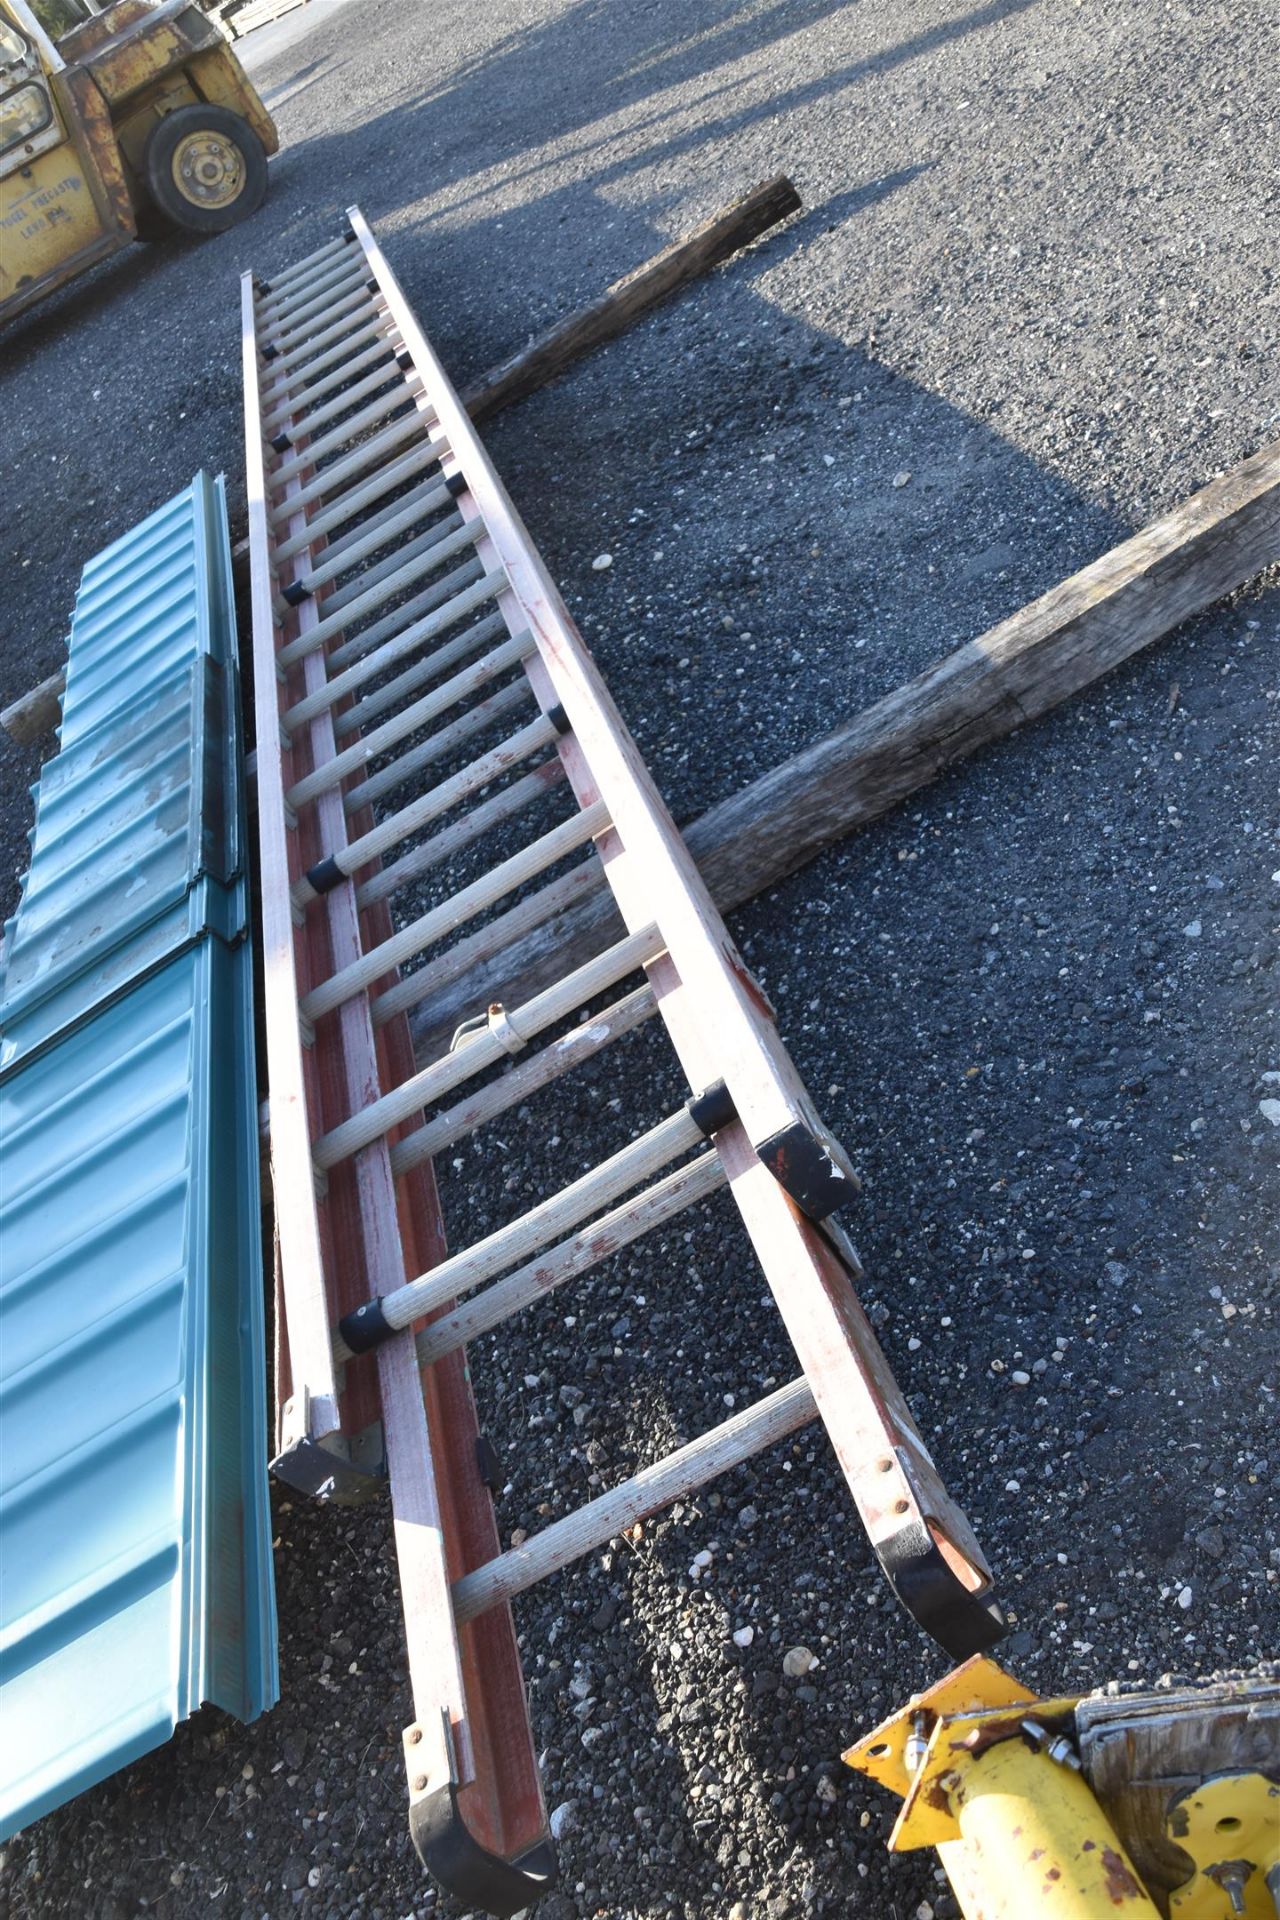 40 IN. Fiberglass Extension Ladder